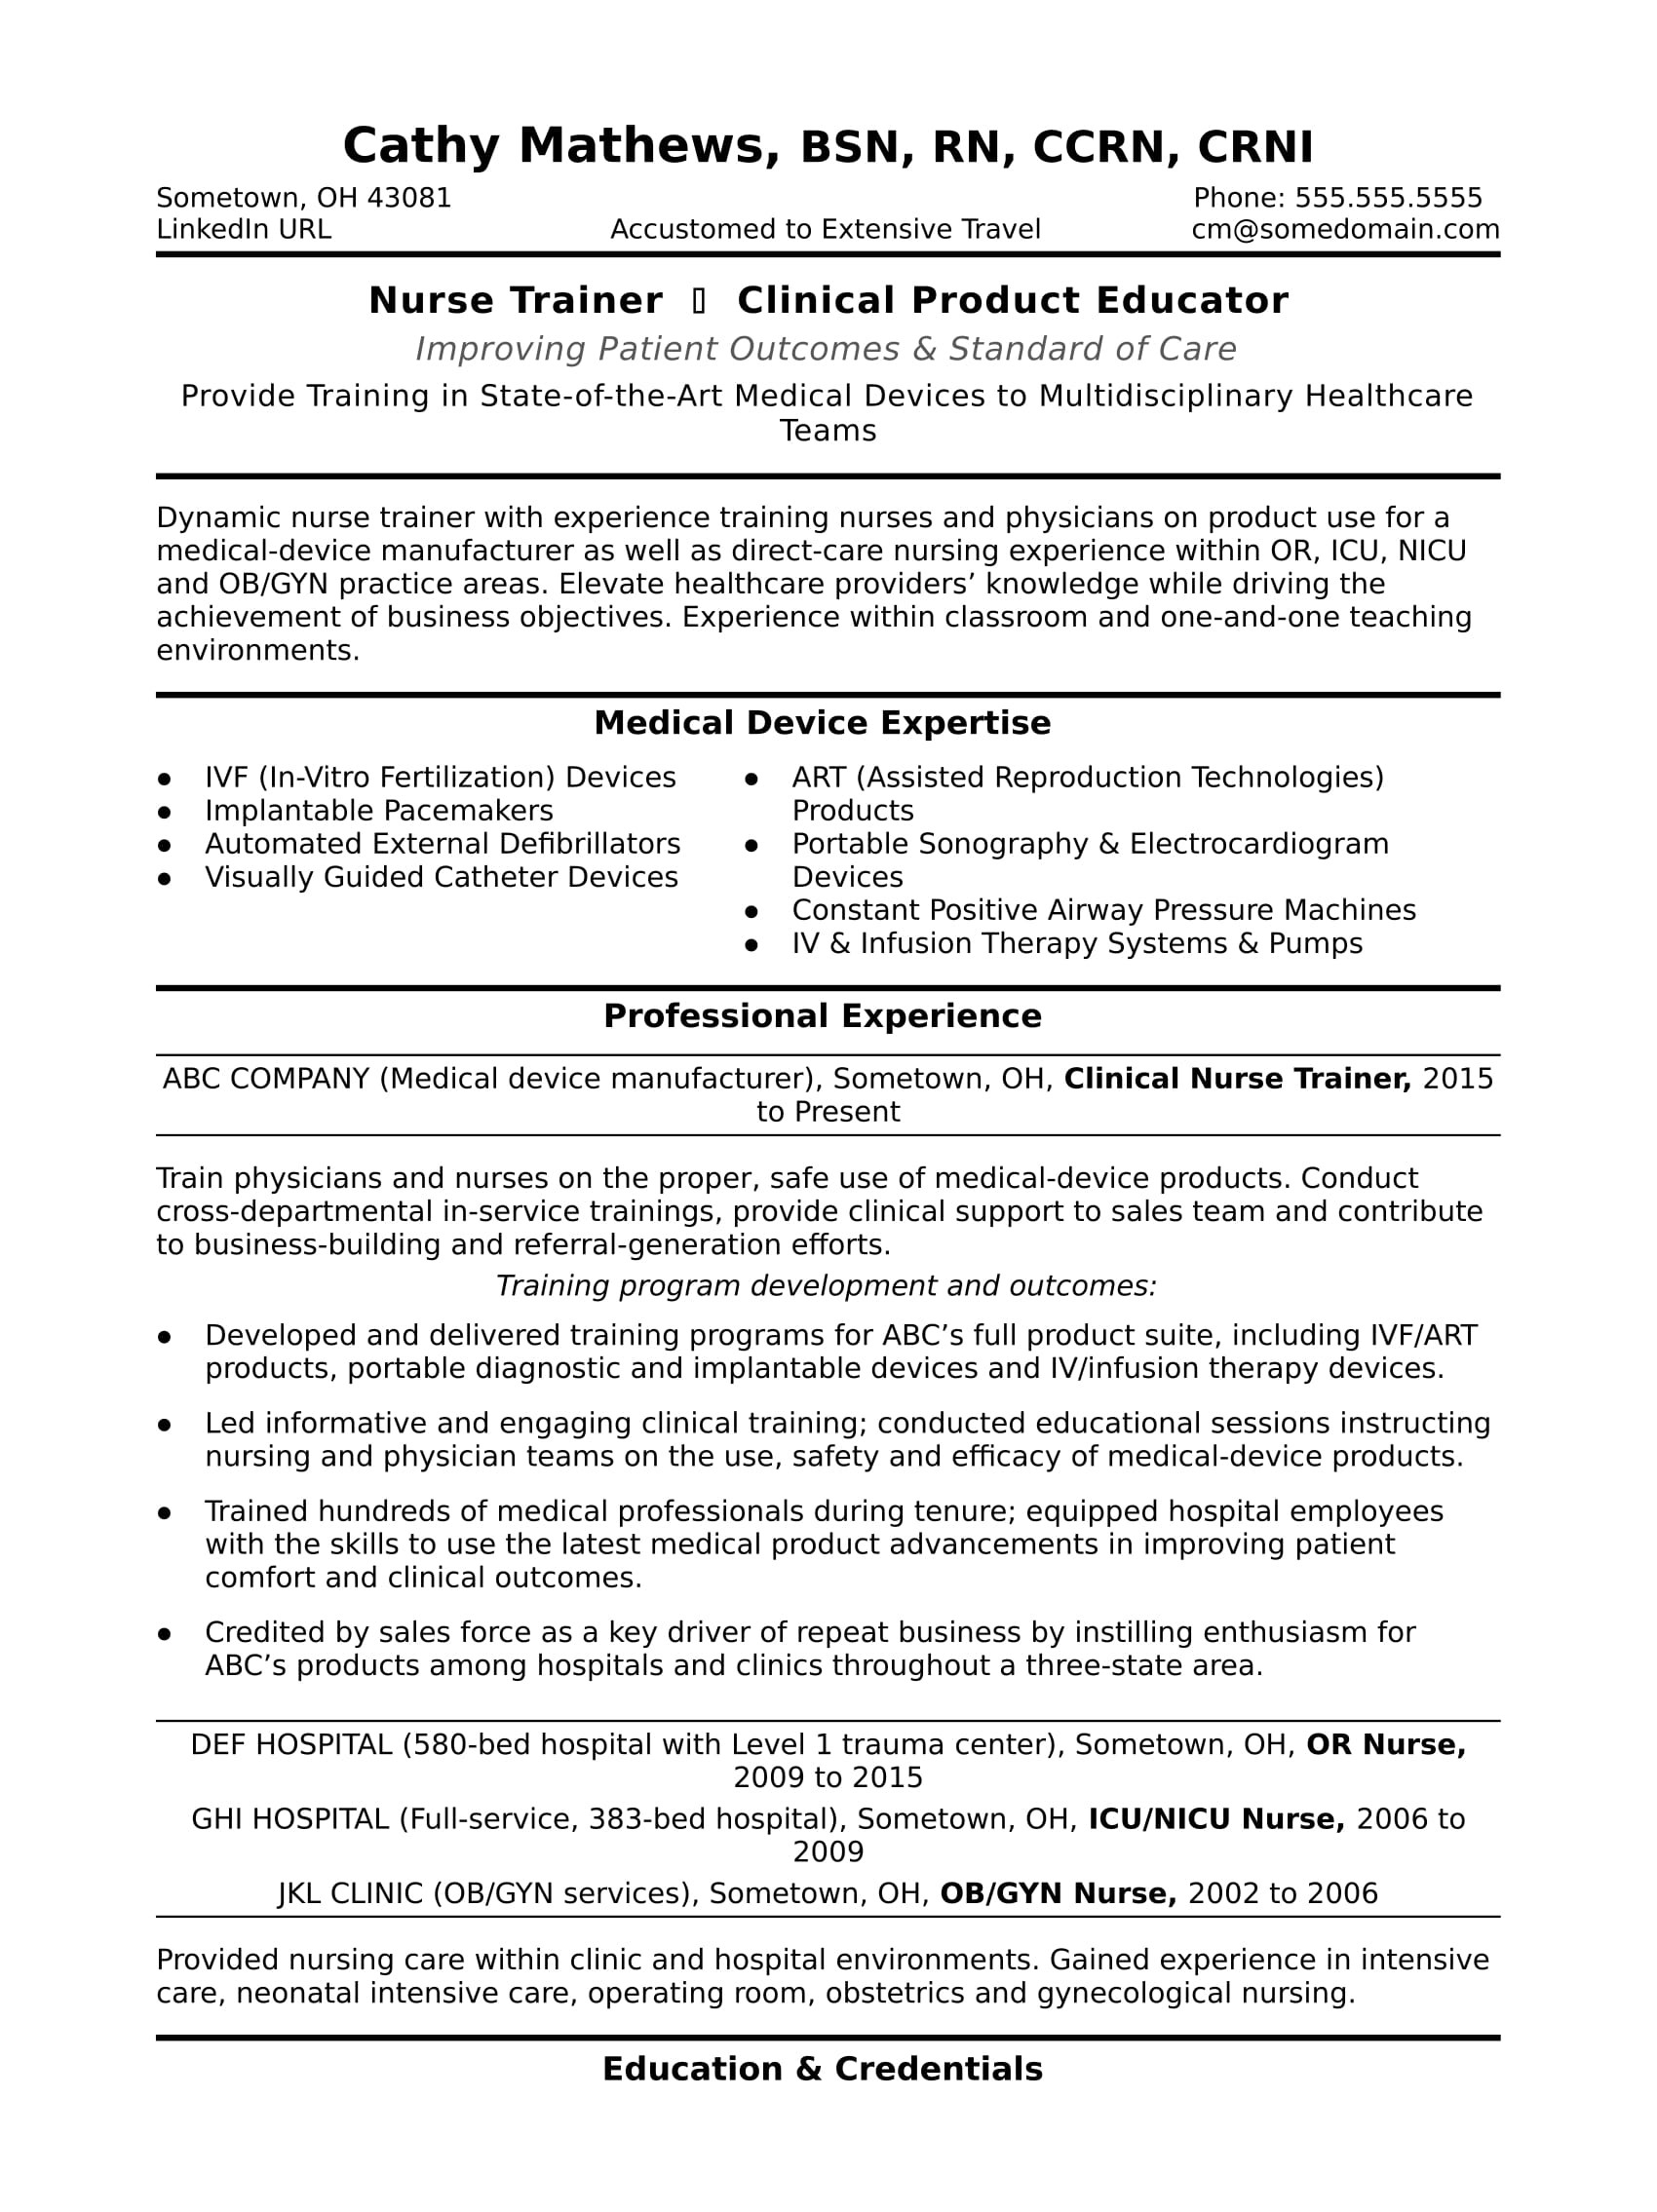 Sample Resume with Trainings and Seminars Nurse Trainer Resume Sample Monster.com